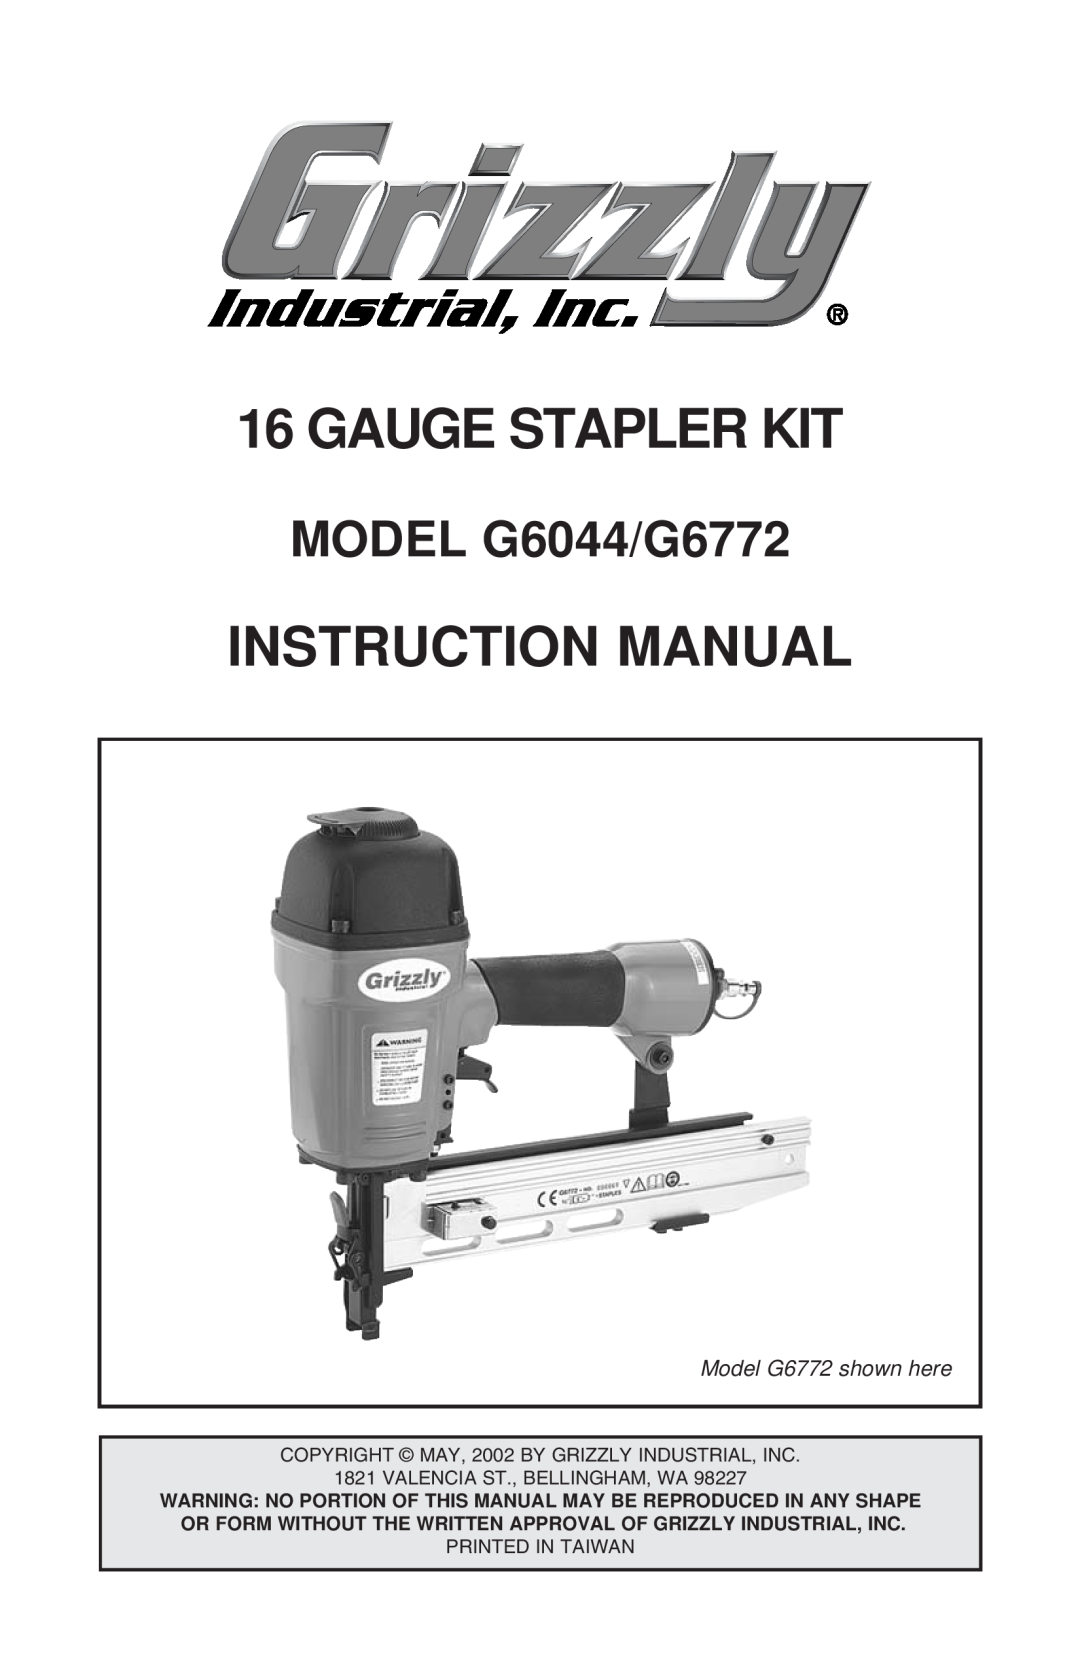 Grizzly instruction manual Gauge Stapler Kit, Instruction Manual, MODEL G6044/G6772, Model G6772 shown here 